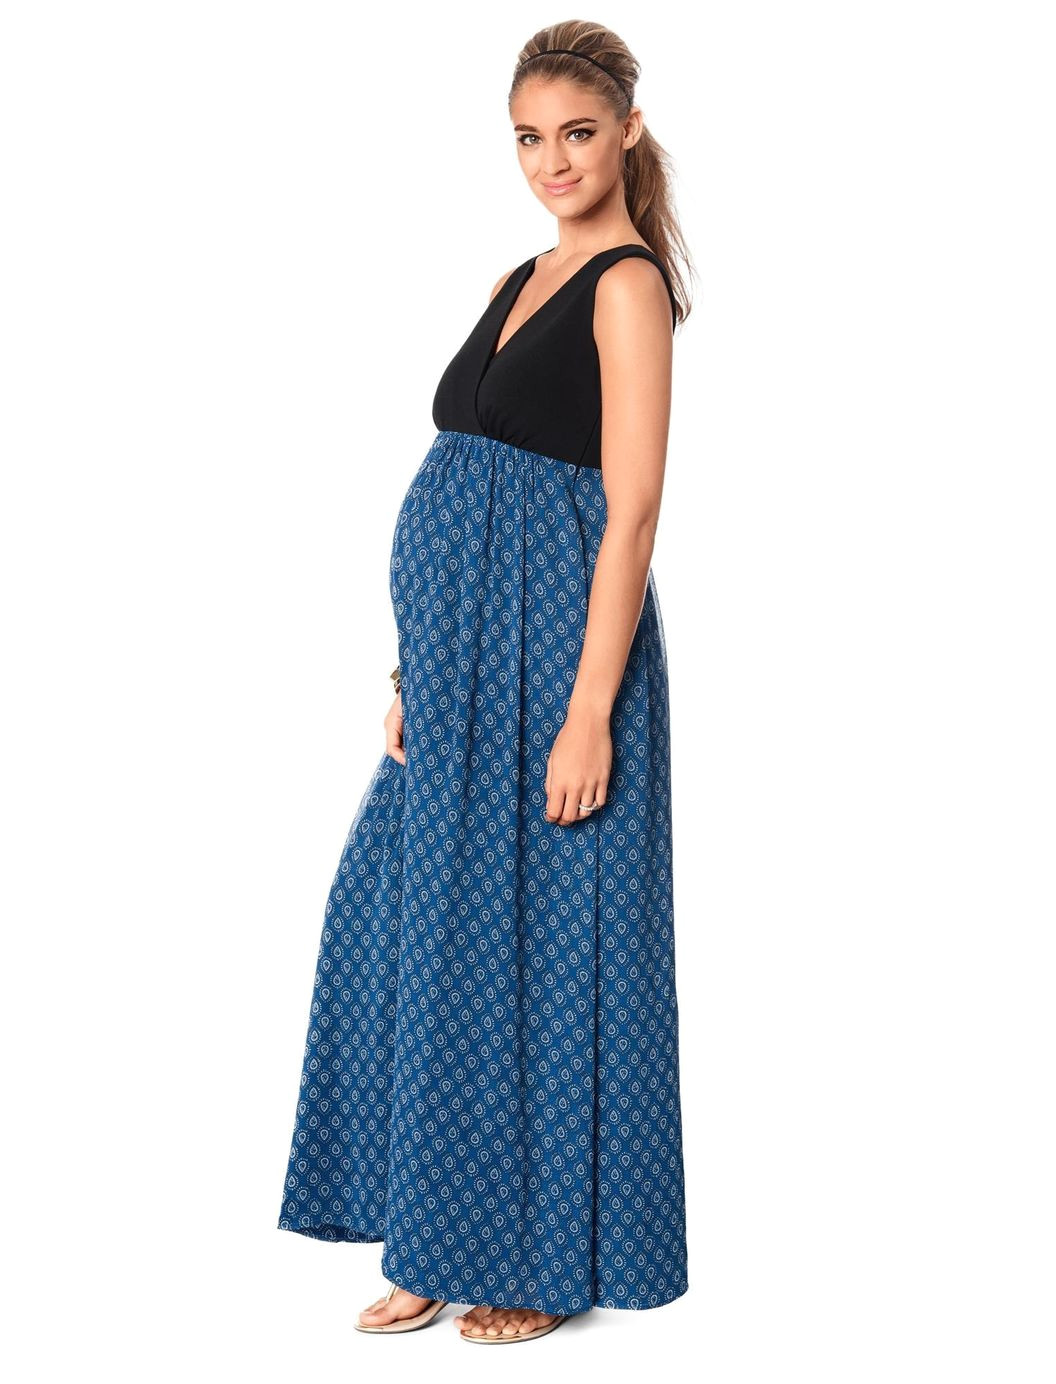 rachel zoe sleeveless chiffon maternity maxi dress multi print